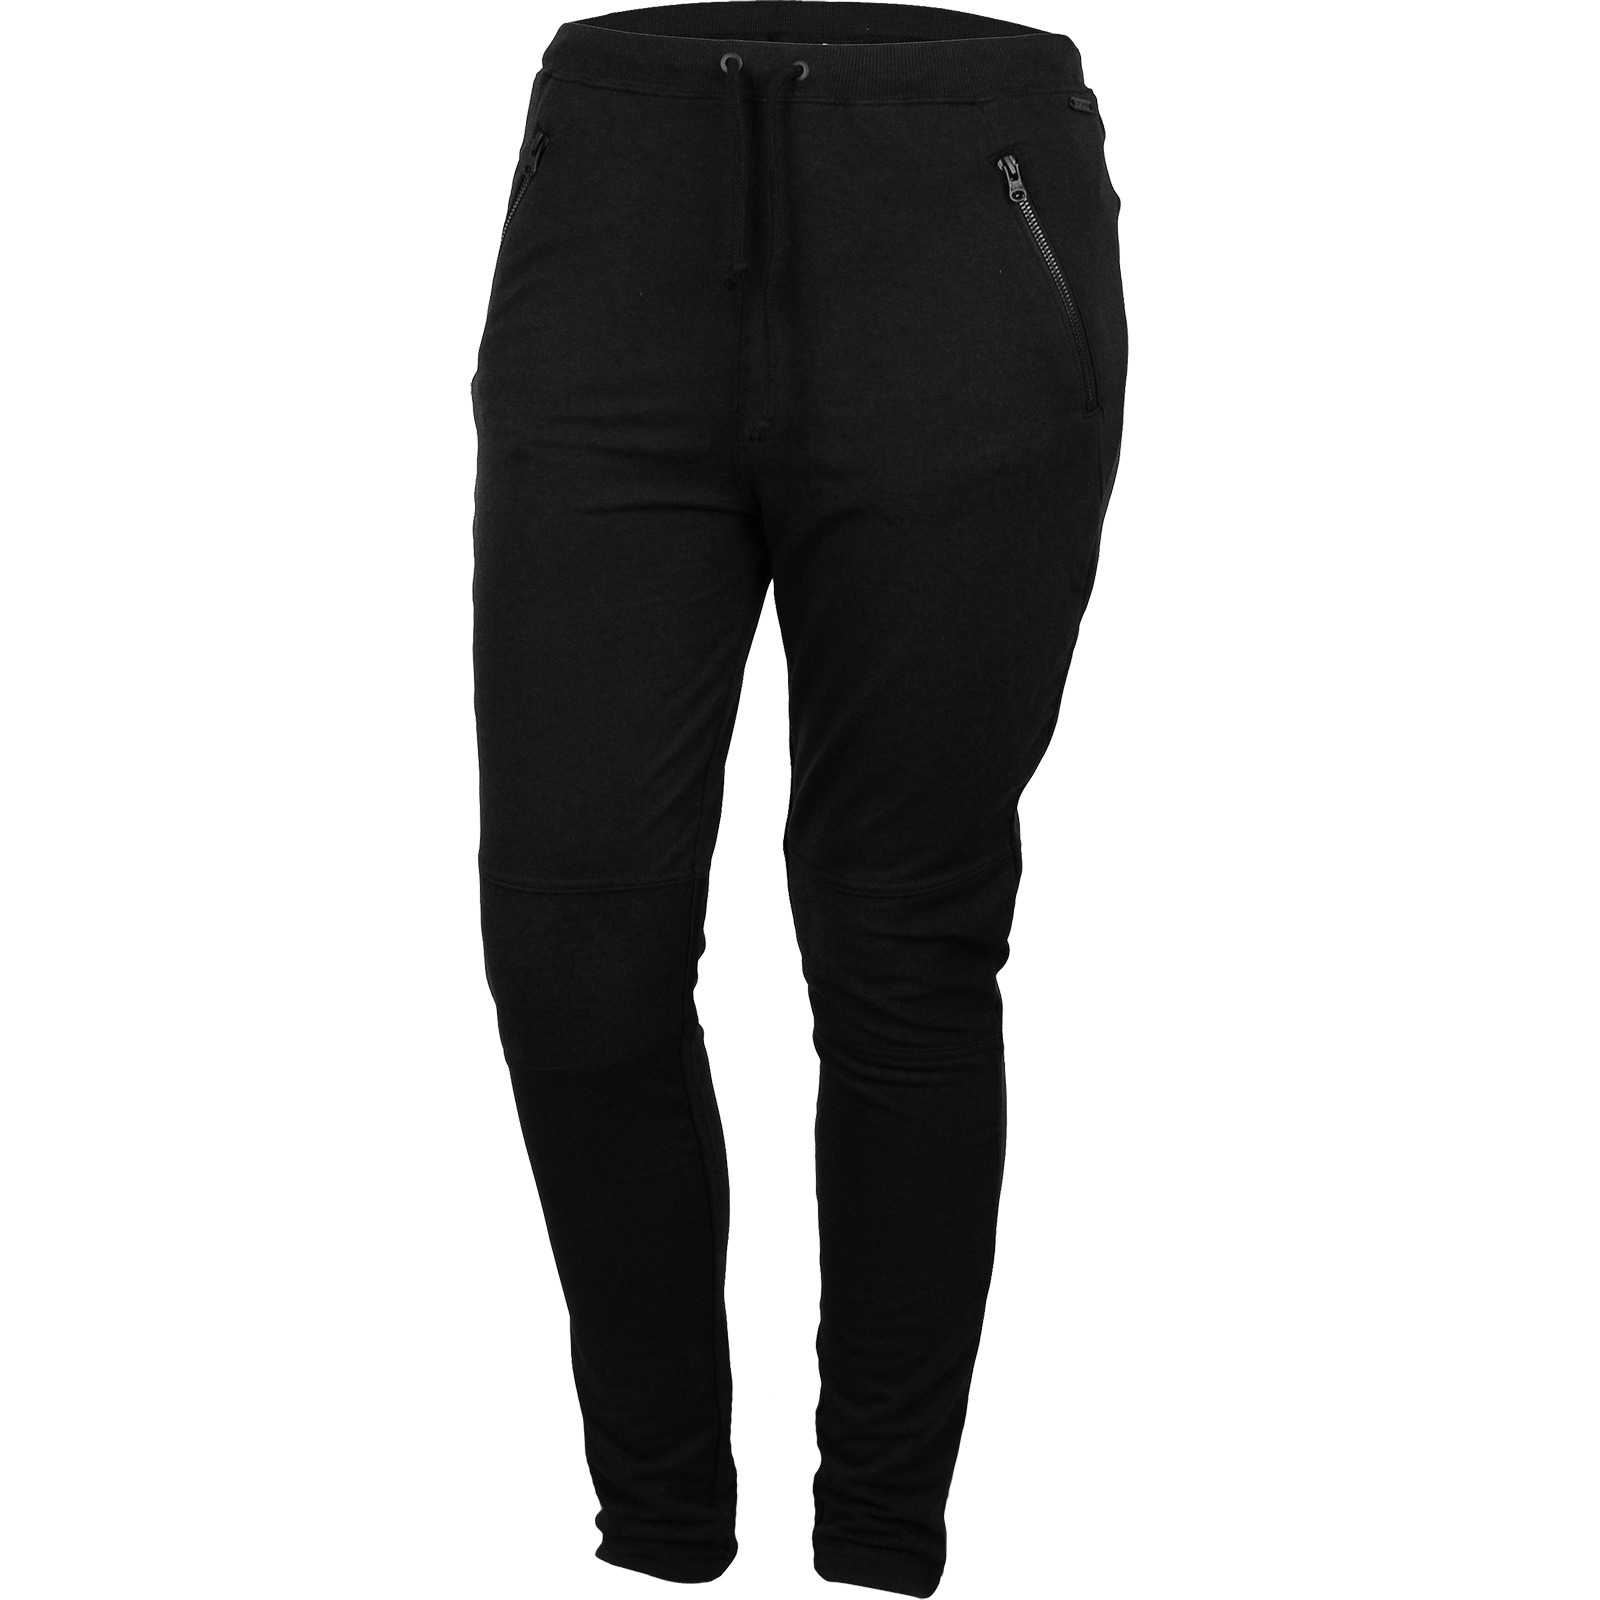 Pantaloni femei Converse Zipper Knit Bottom 10155C-003